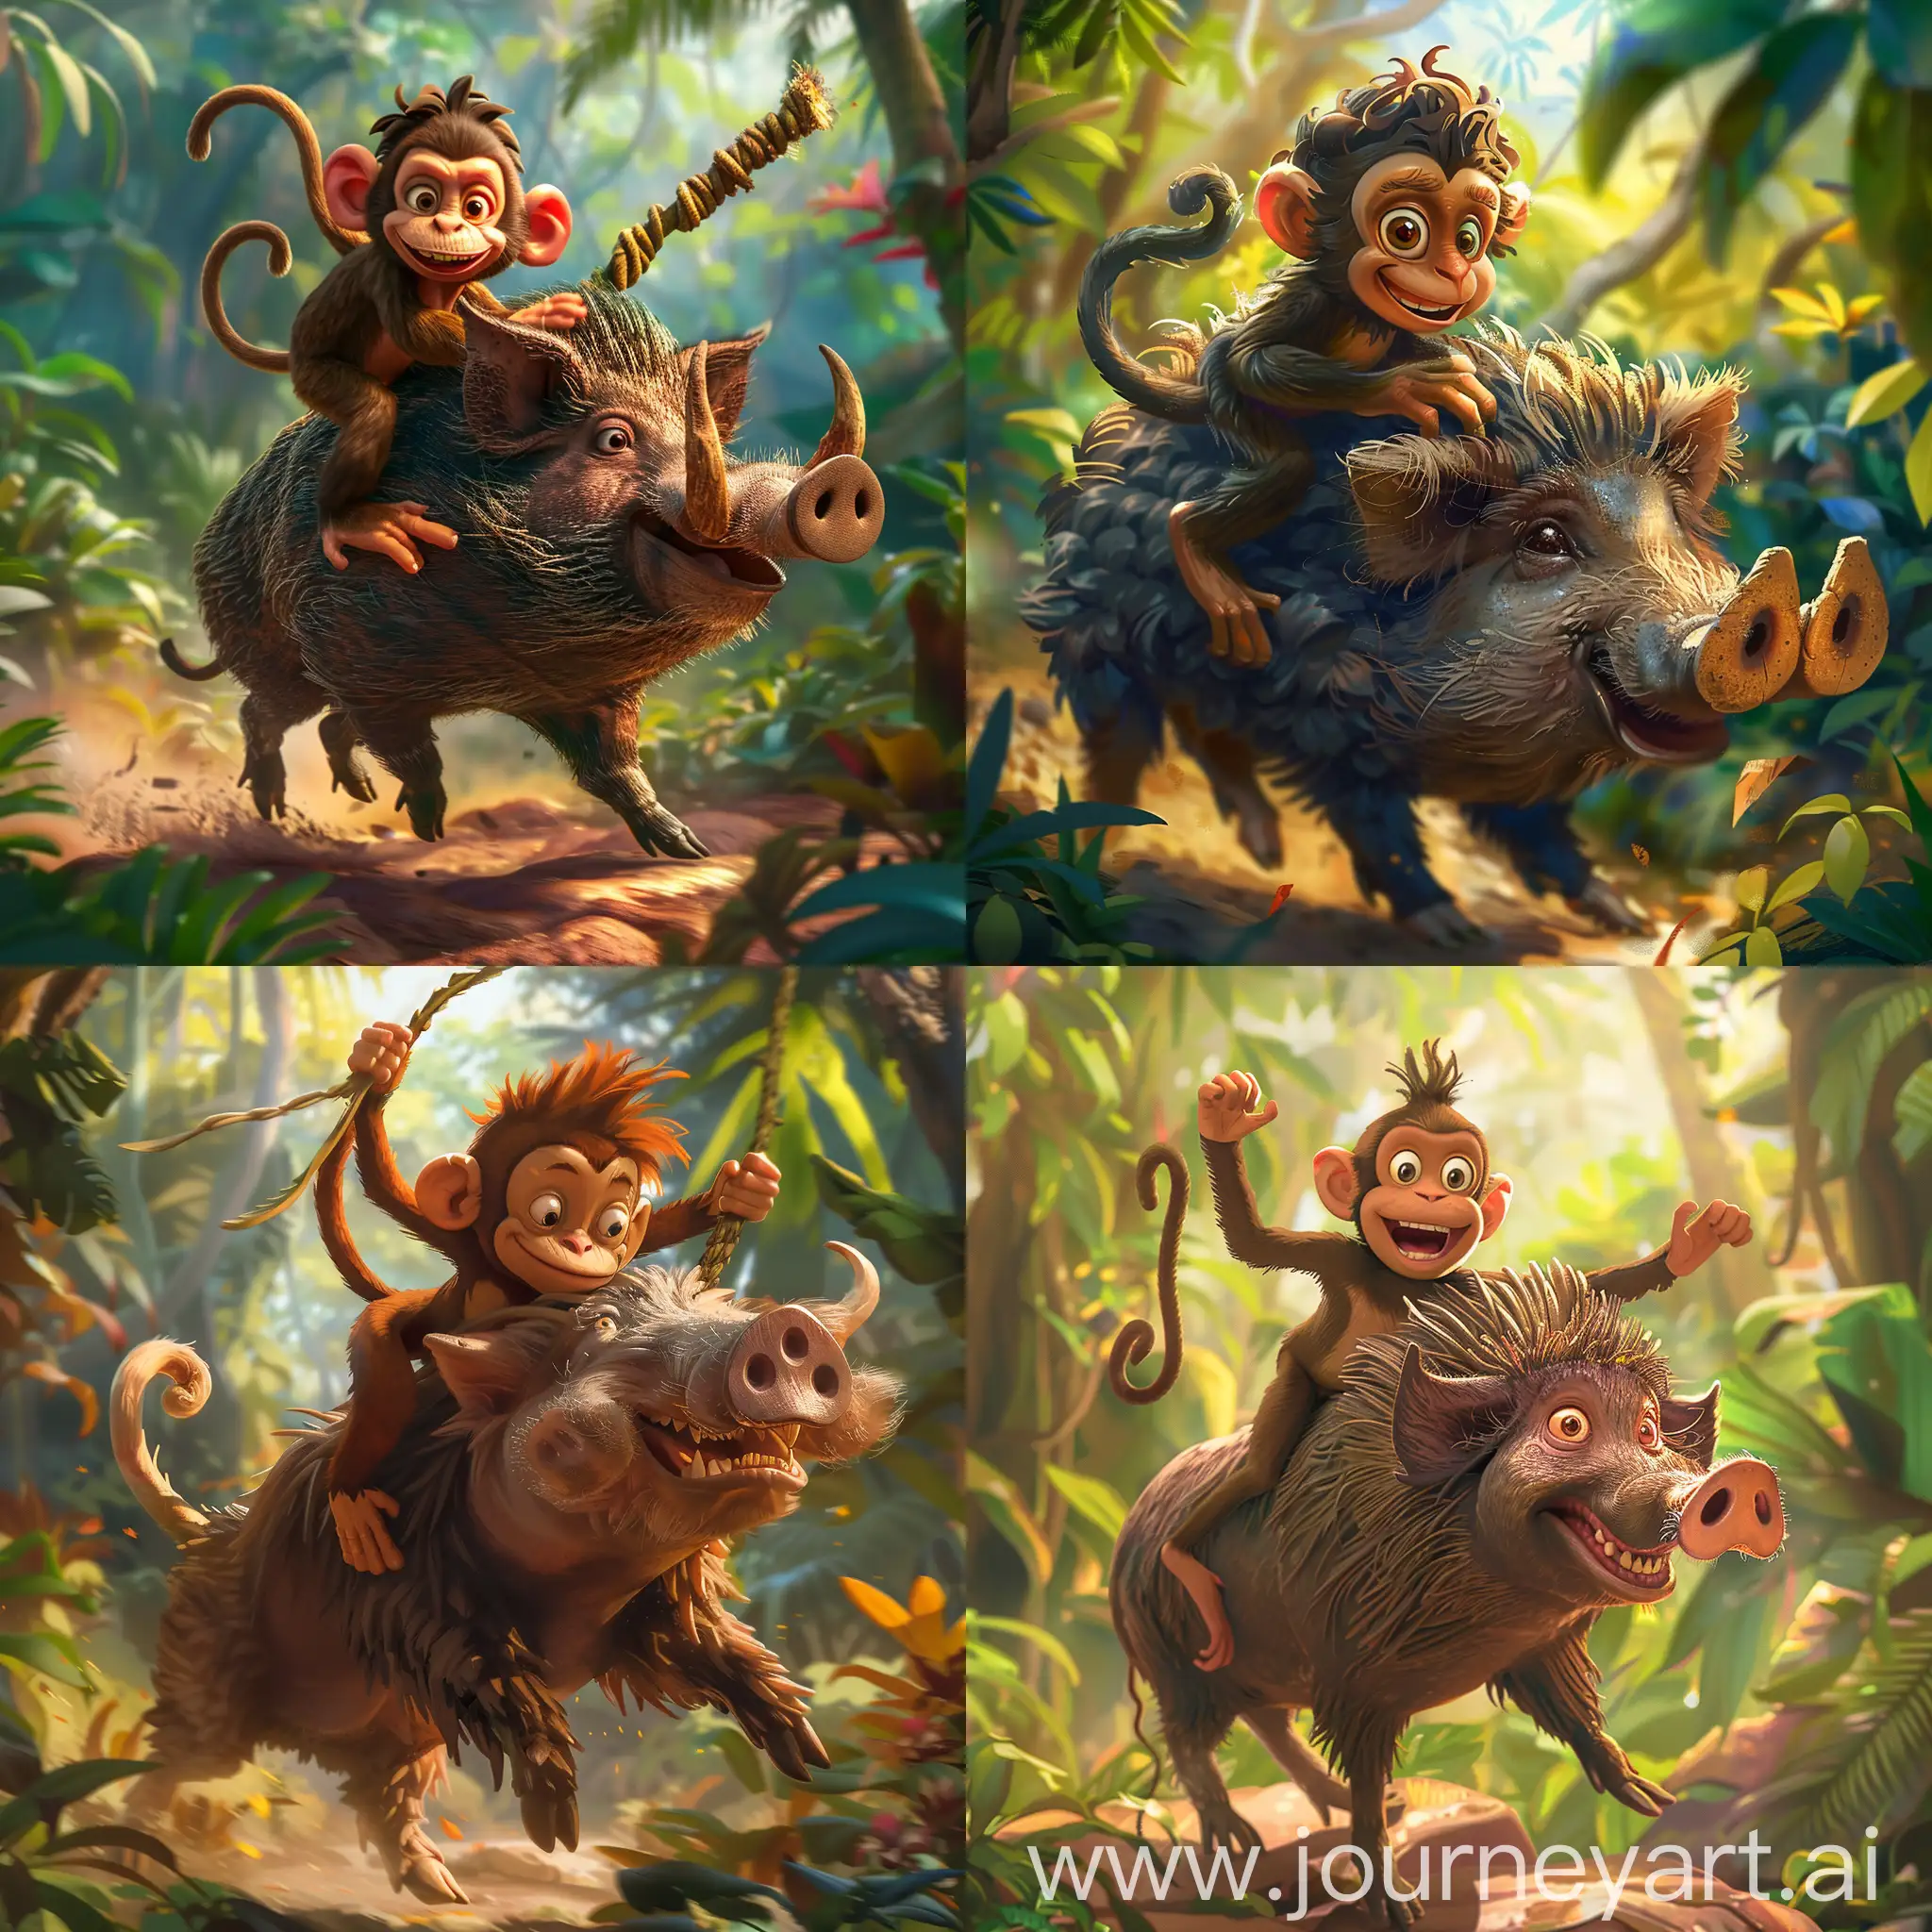 Mischievous-Monkey-Riding-Sturdy-Boar-in-Whimsical-Jungle-Scene